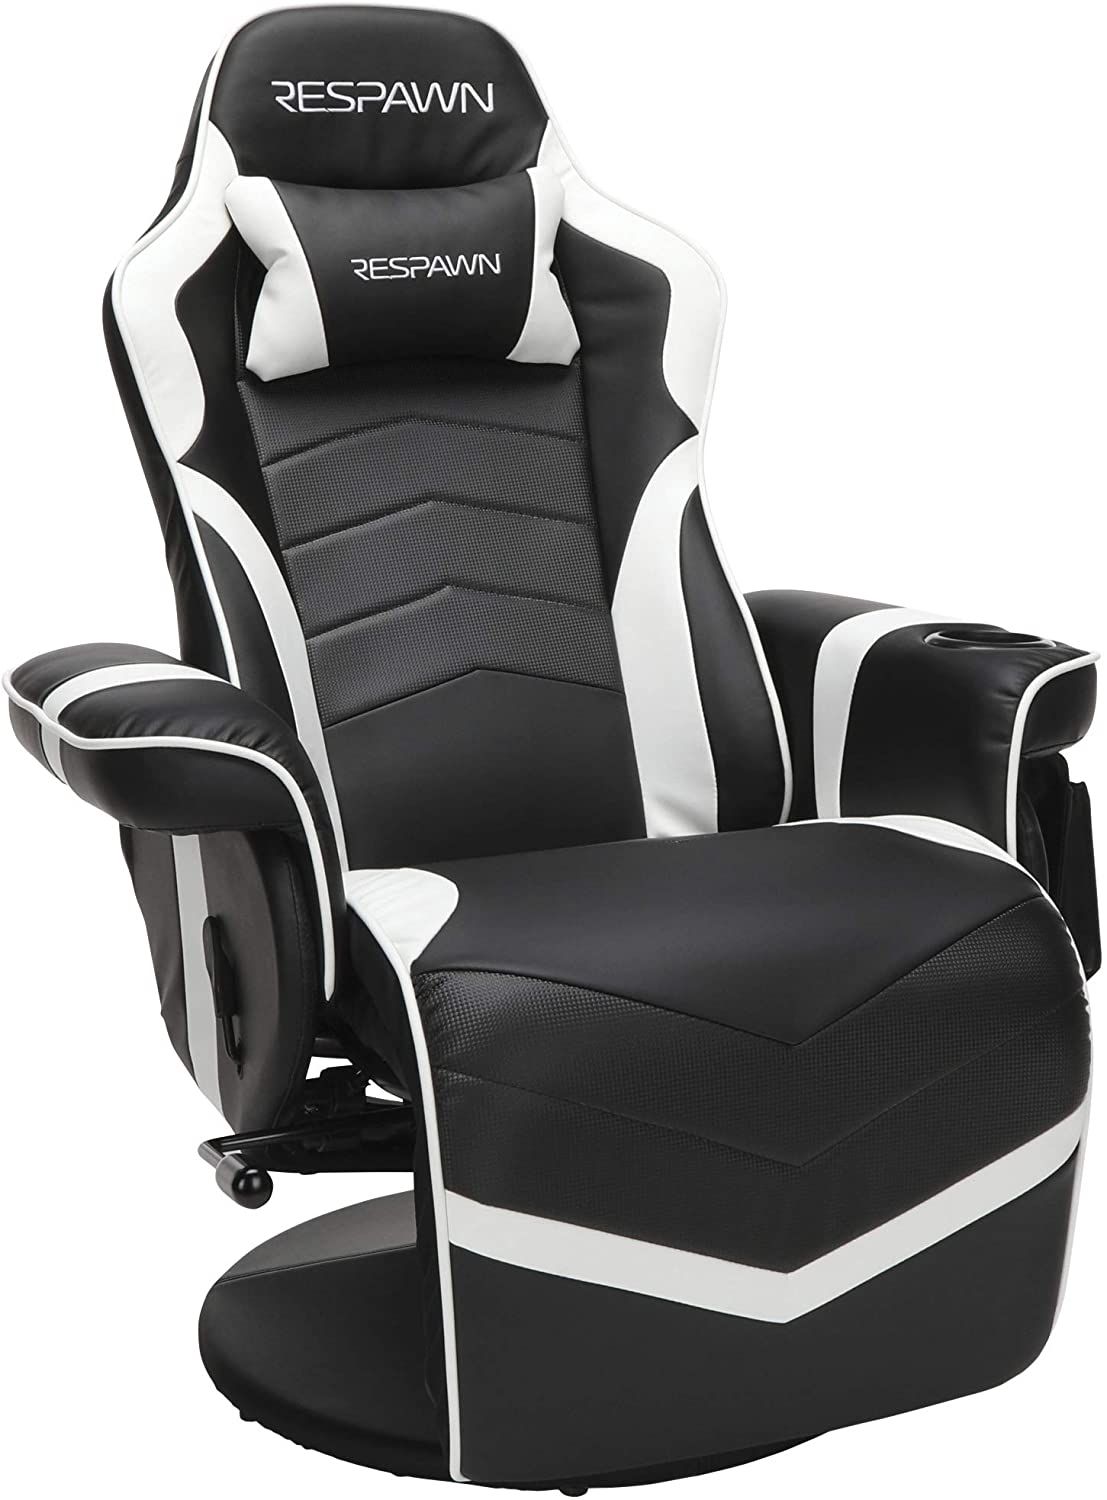 Respawn 900 Gaming Chair